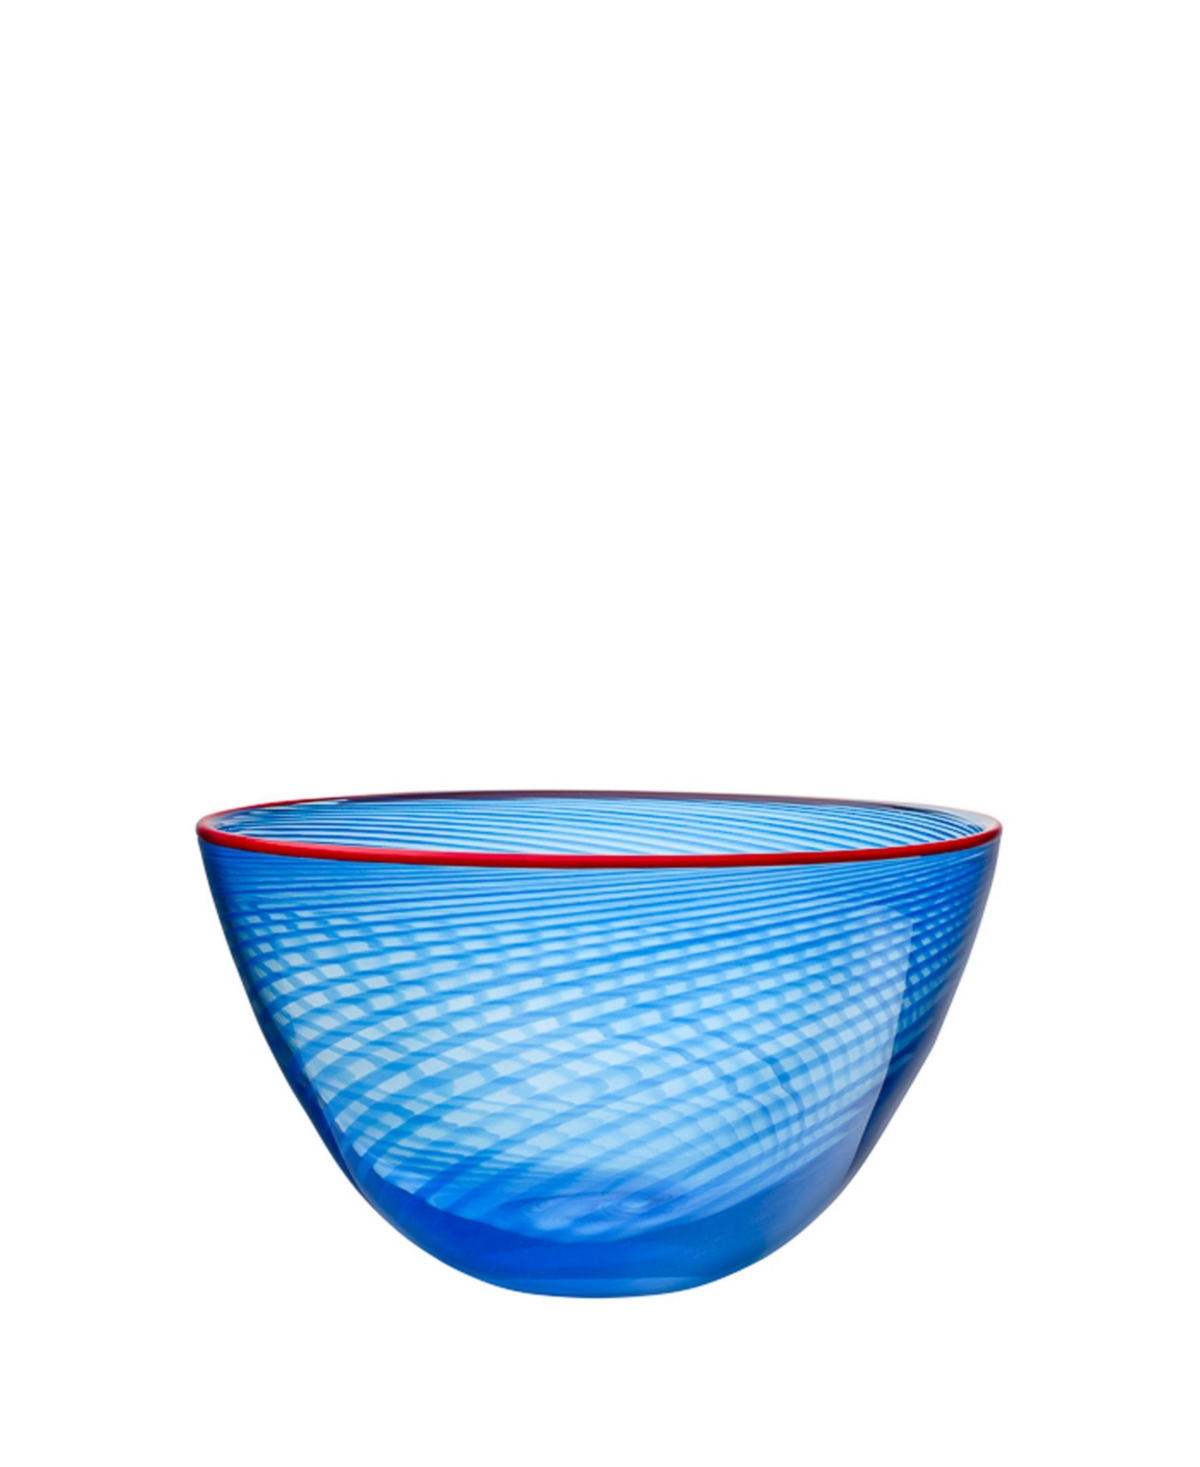 Red Rim Small Bowl - Blue